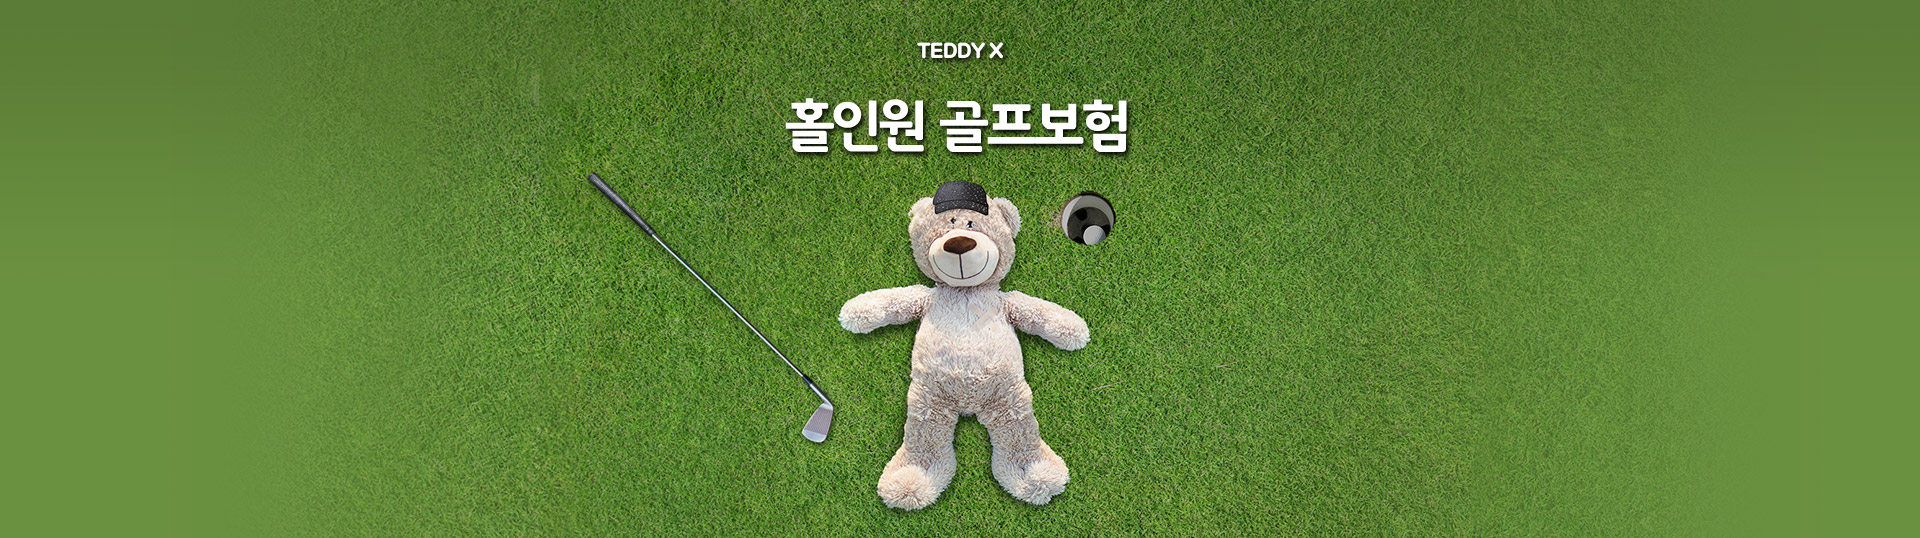 TEDDY X 홀인원 골프보험